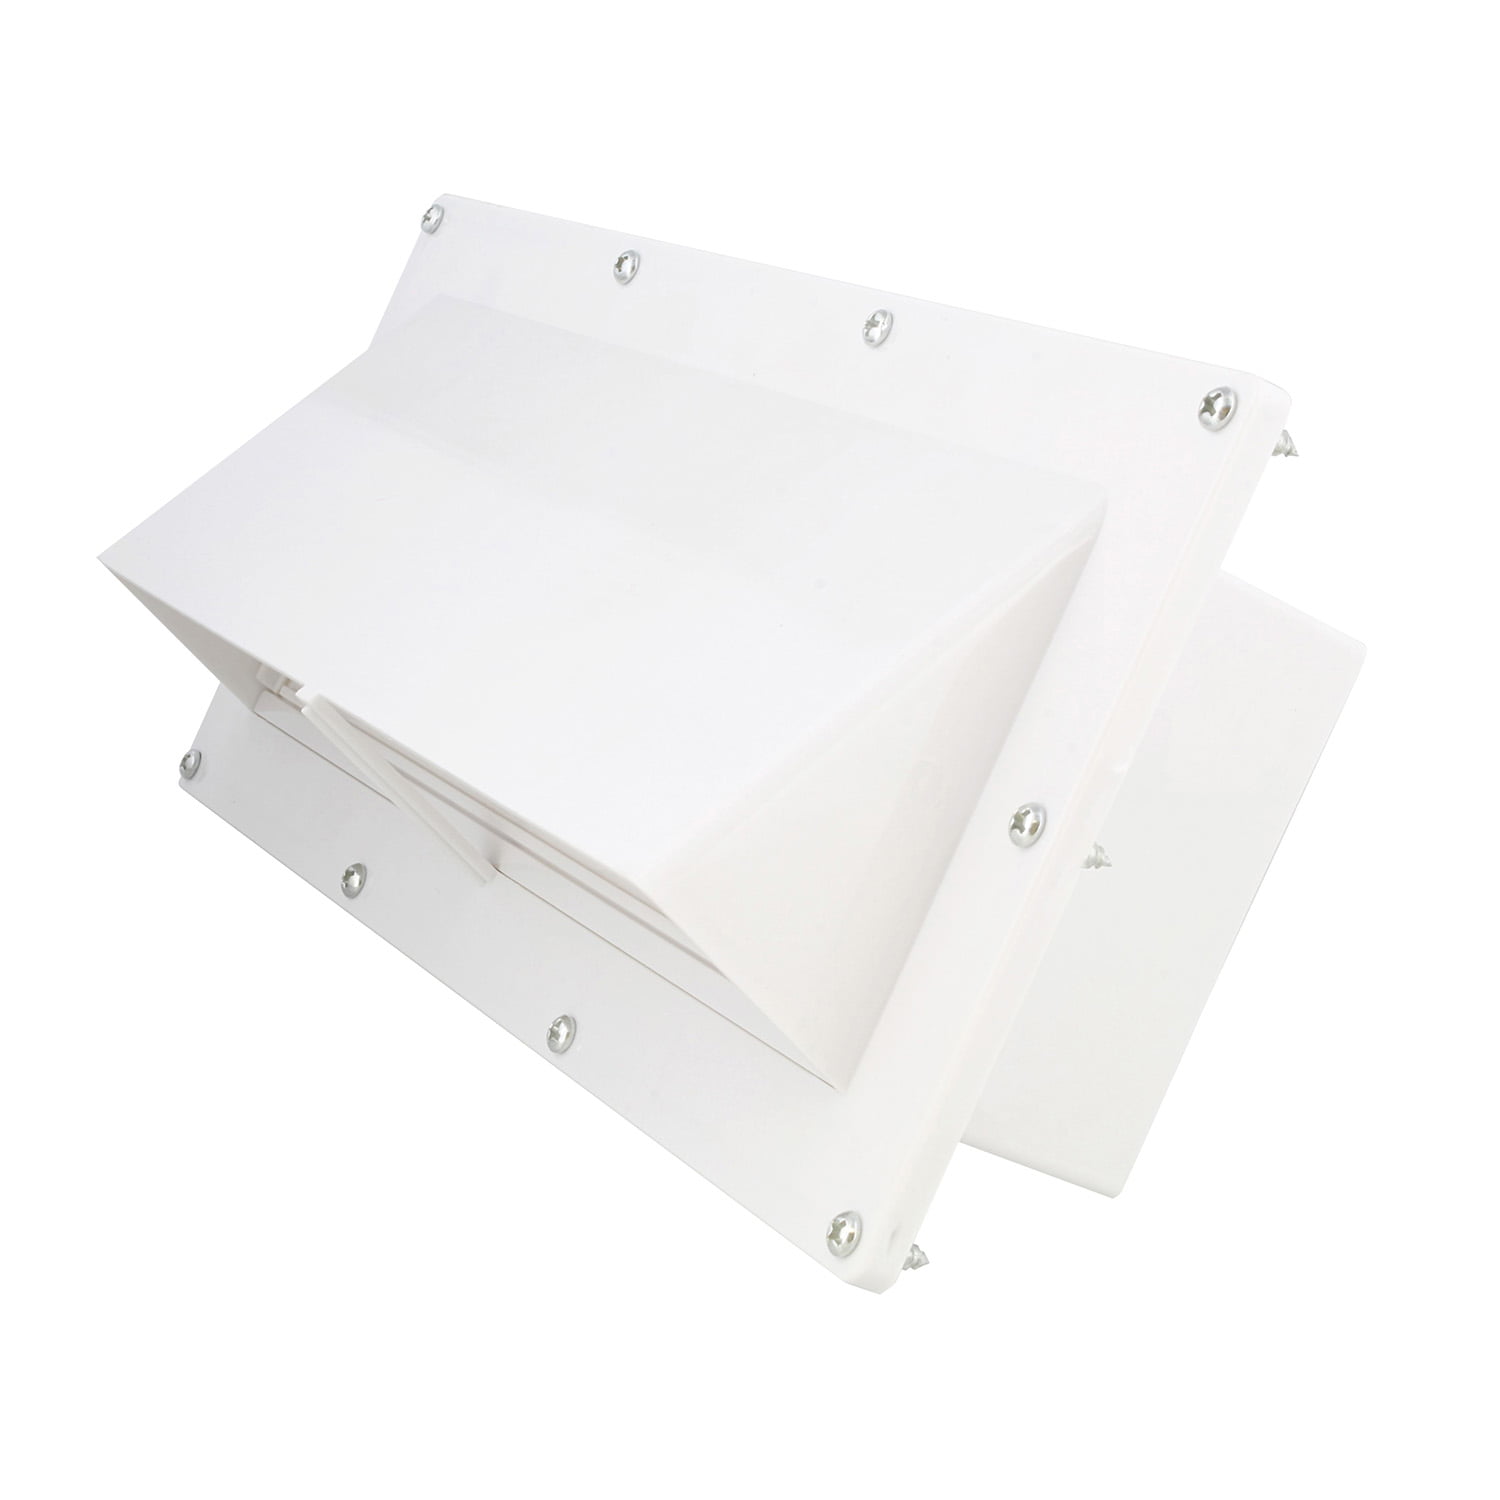 Vent Cap 5x5 in White Plastic Air Vent Cover Guard Screen HVAC Vent Duct Cover 